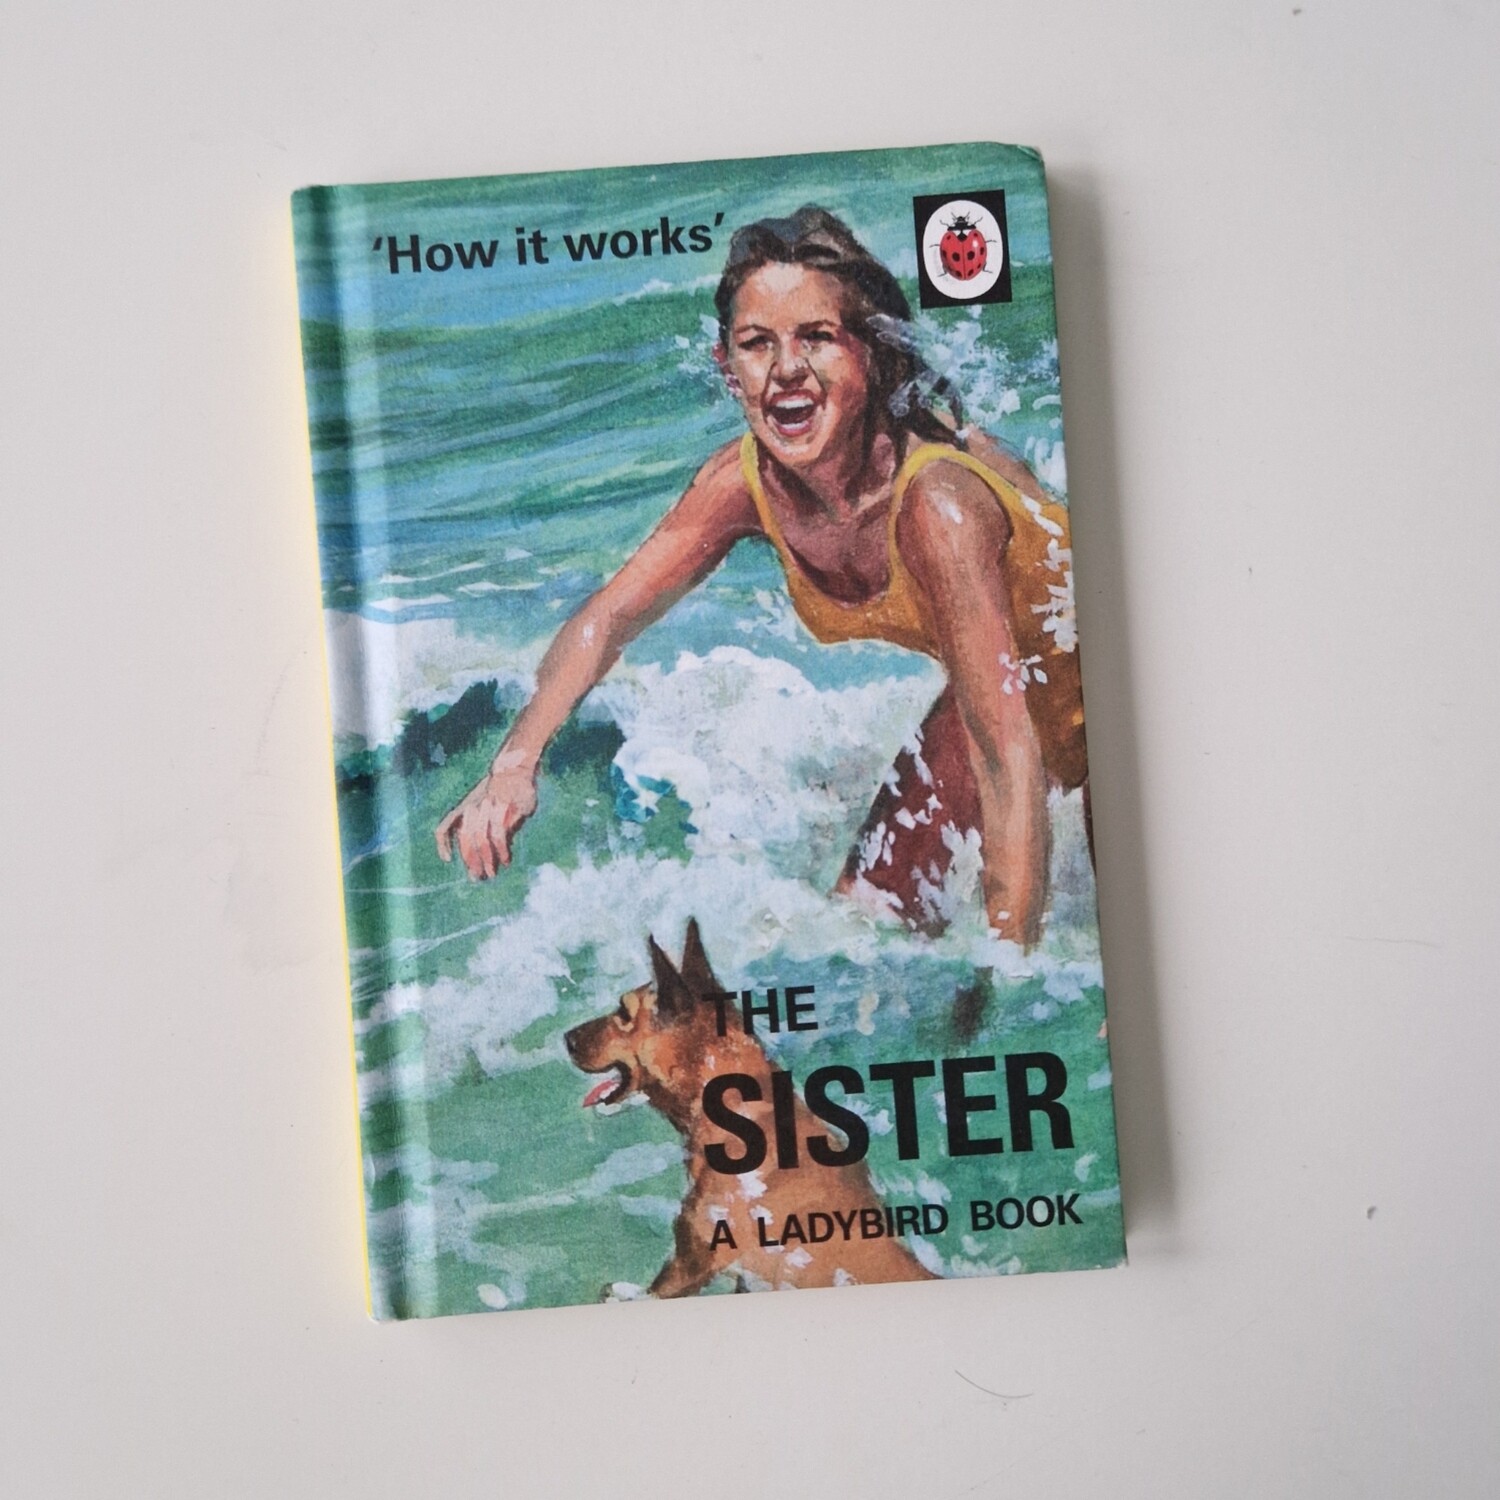 The Sister - ladybird book